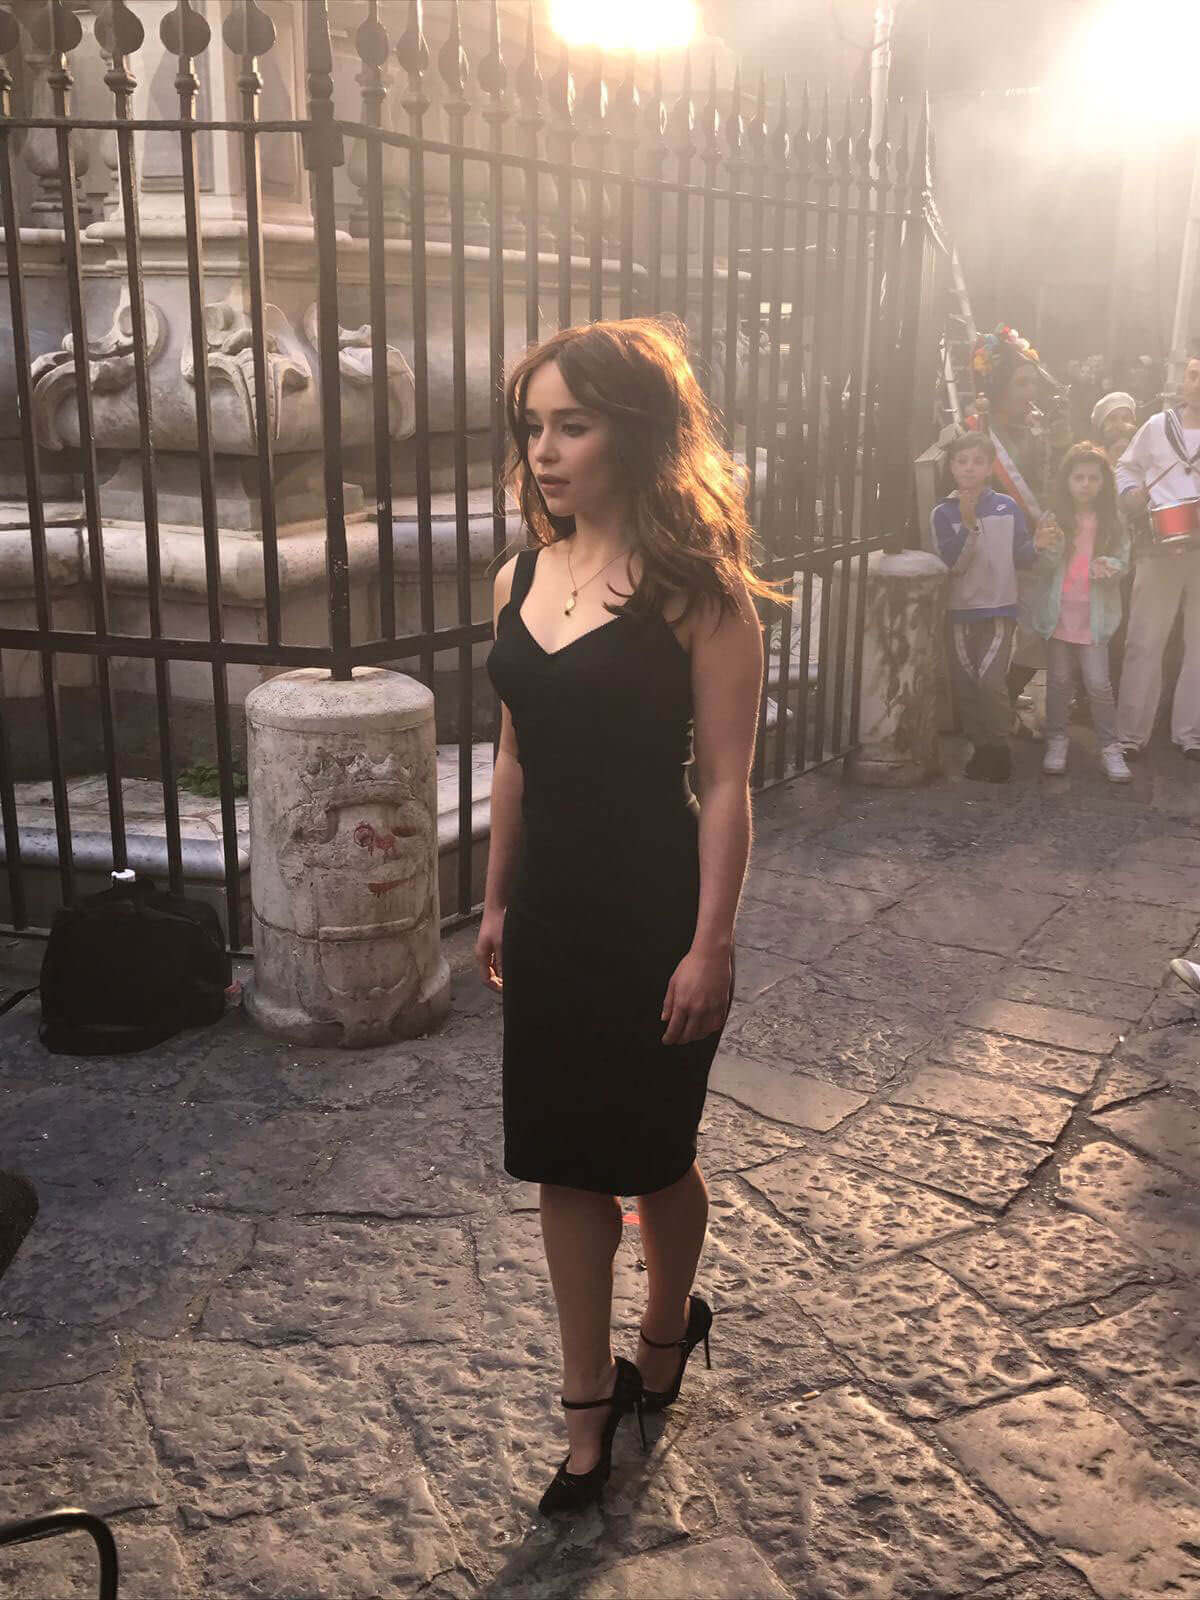 Emilia Clarke Stills Filming on the Streets of Naples